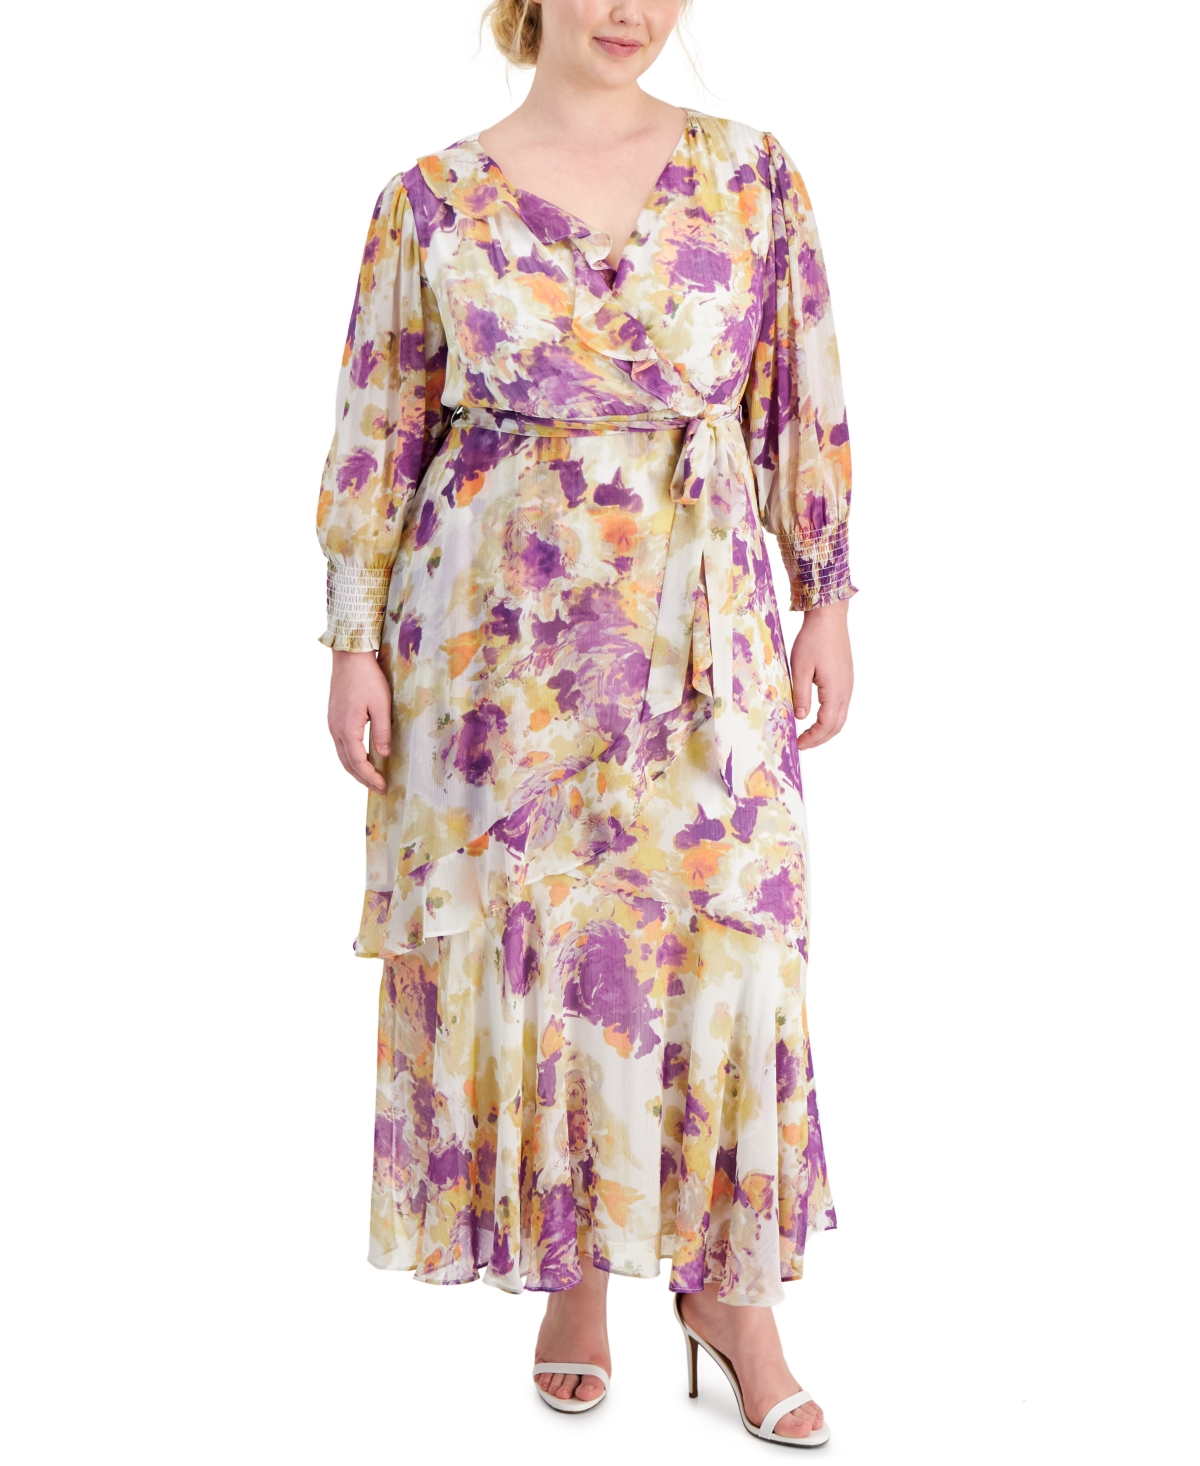 Plus Size Printed Chiffon A-Line Dress - Ivory Select